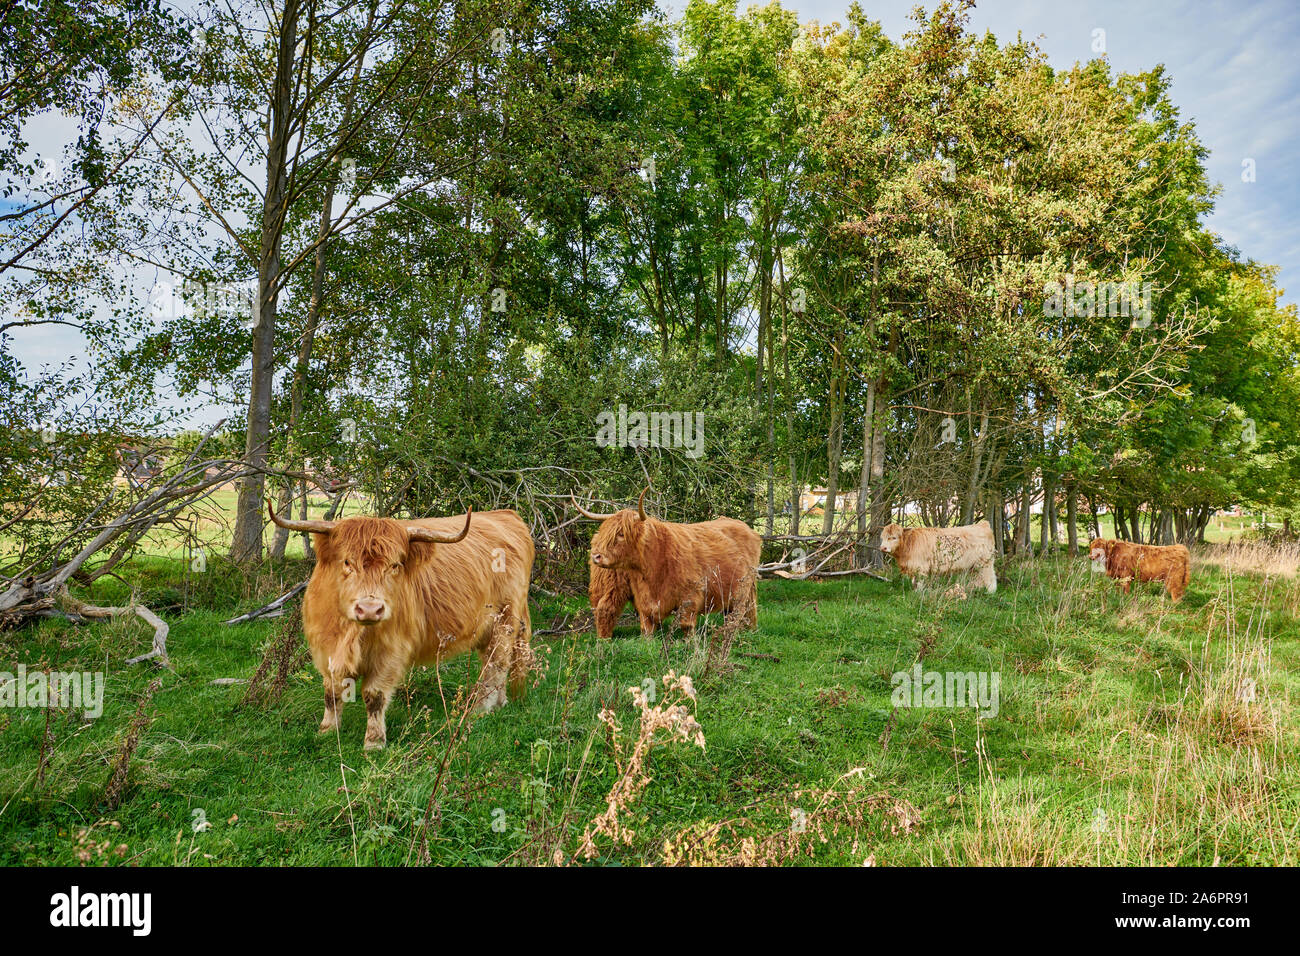 Highland cattle ou Kyloe au pâturage, Waldfeucht, Rhénanie du Nord-Westphalie, Allemagne Banque D'Images